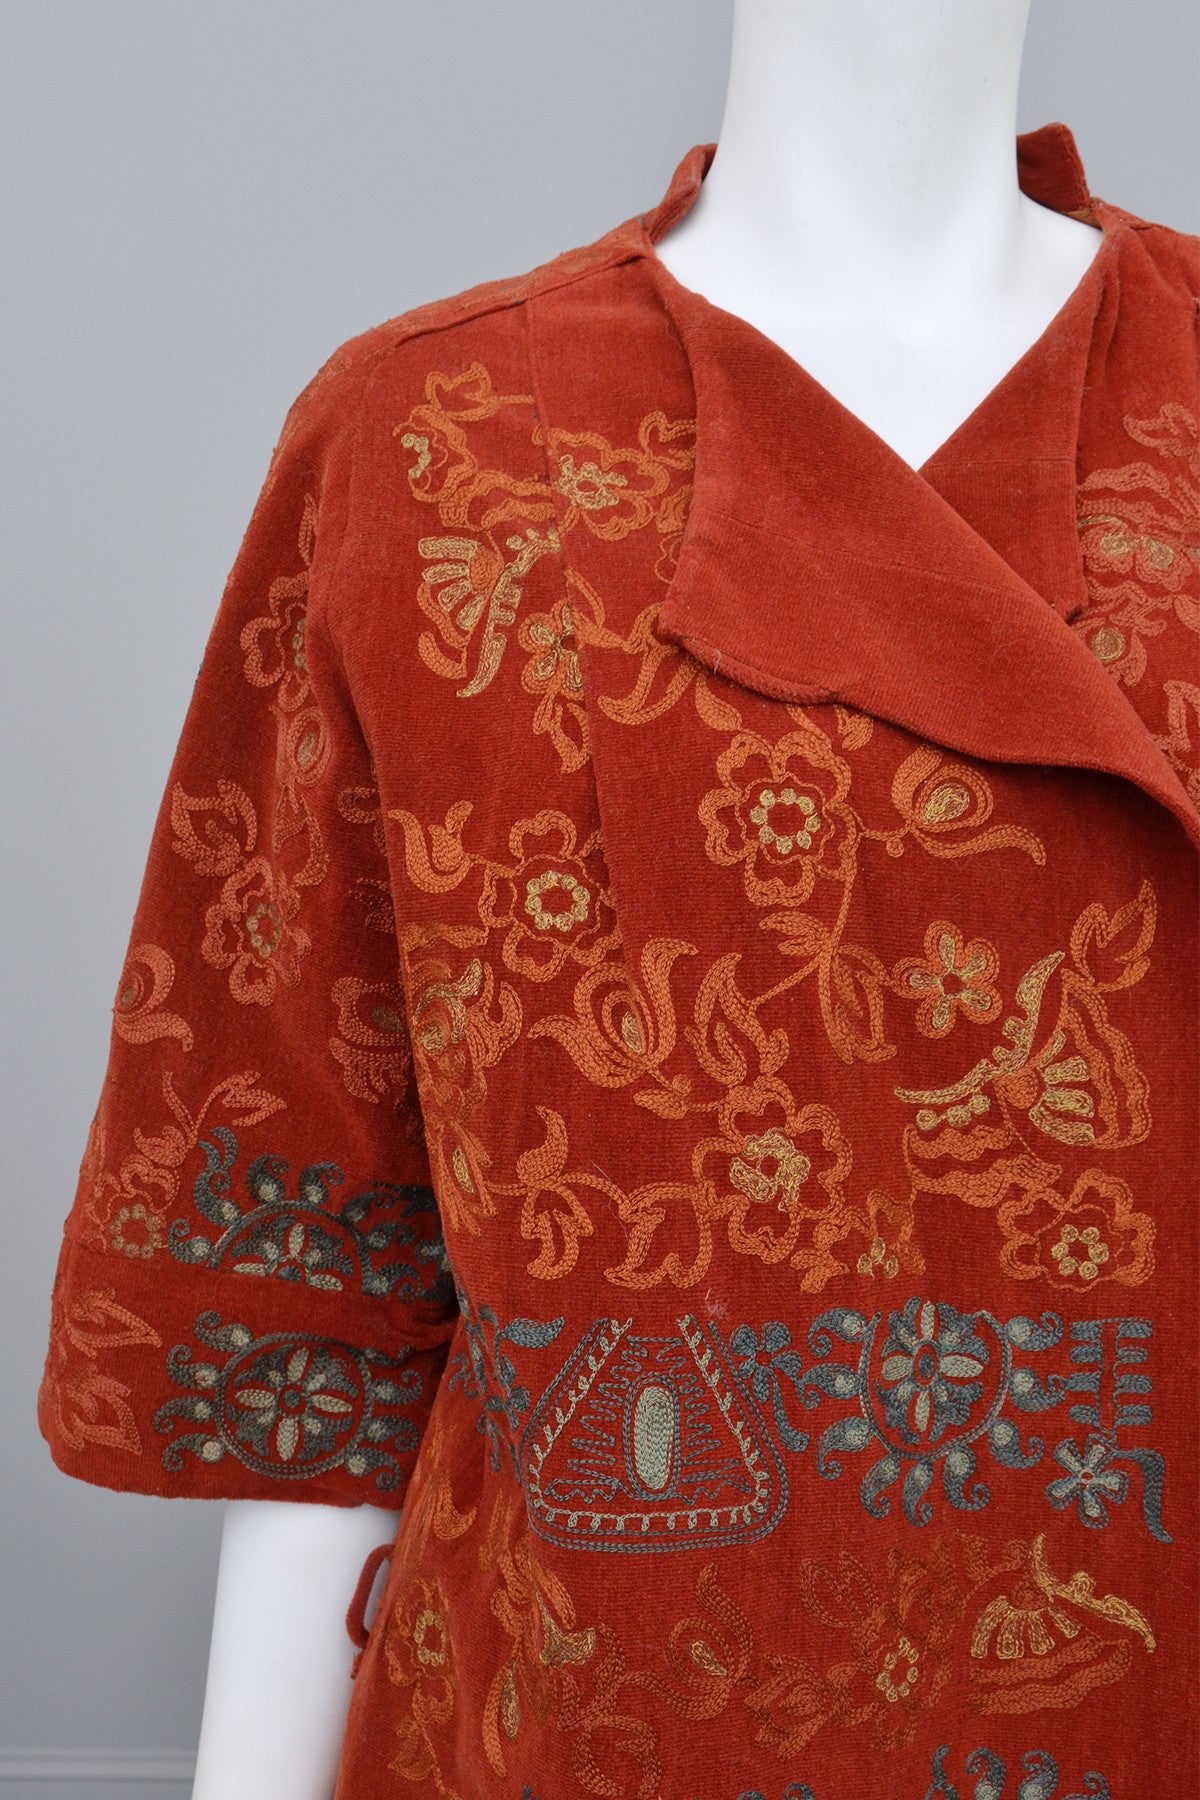 Aqua Embroidered Paprika Red Velveteen Corduroy Vintage Duster Coat